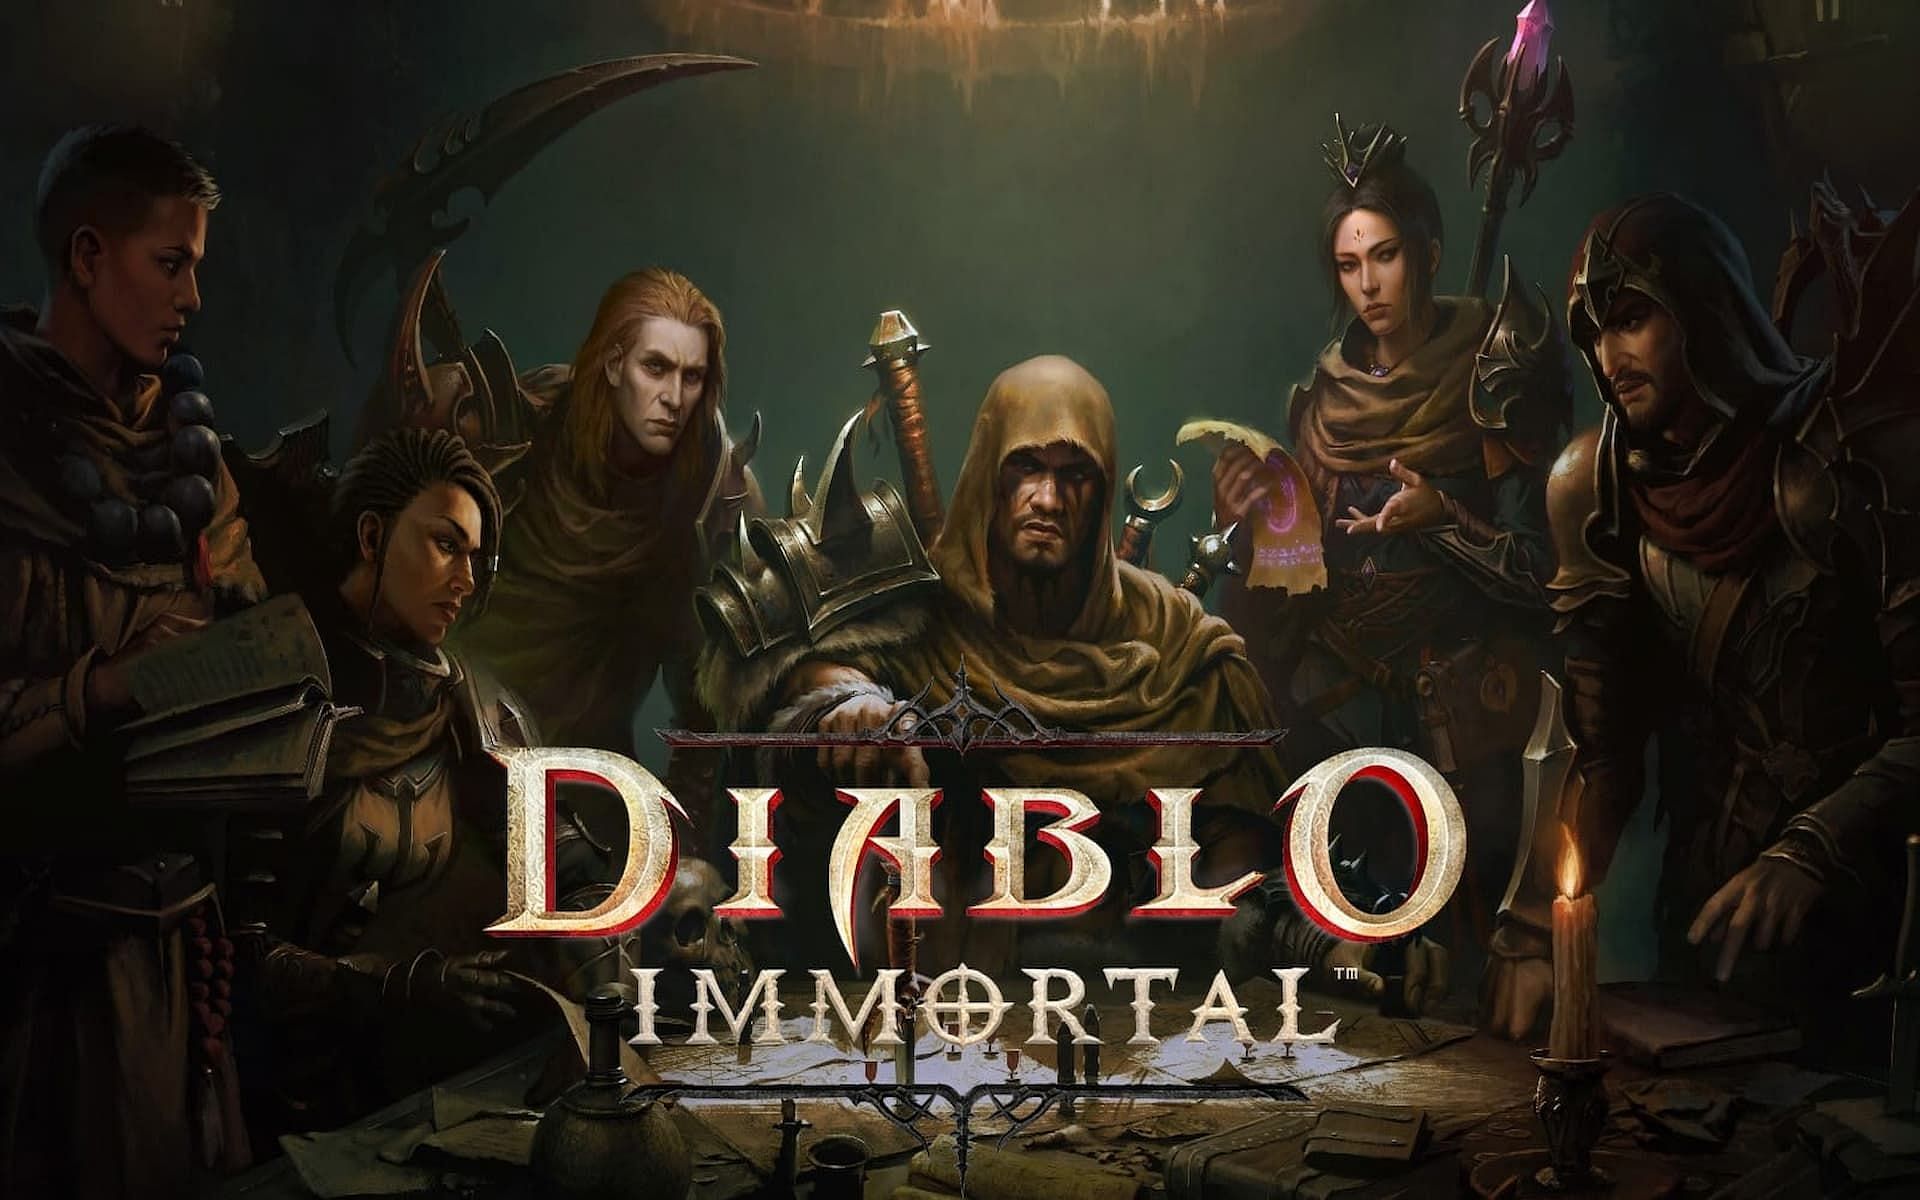 Diablo Immortal Is For Mobile Gamers, Not Original Diablo Fans